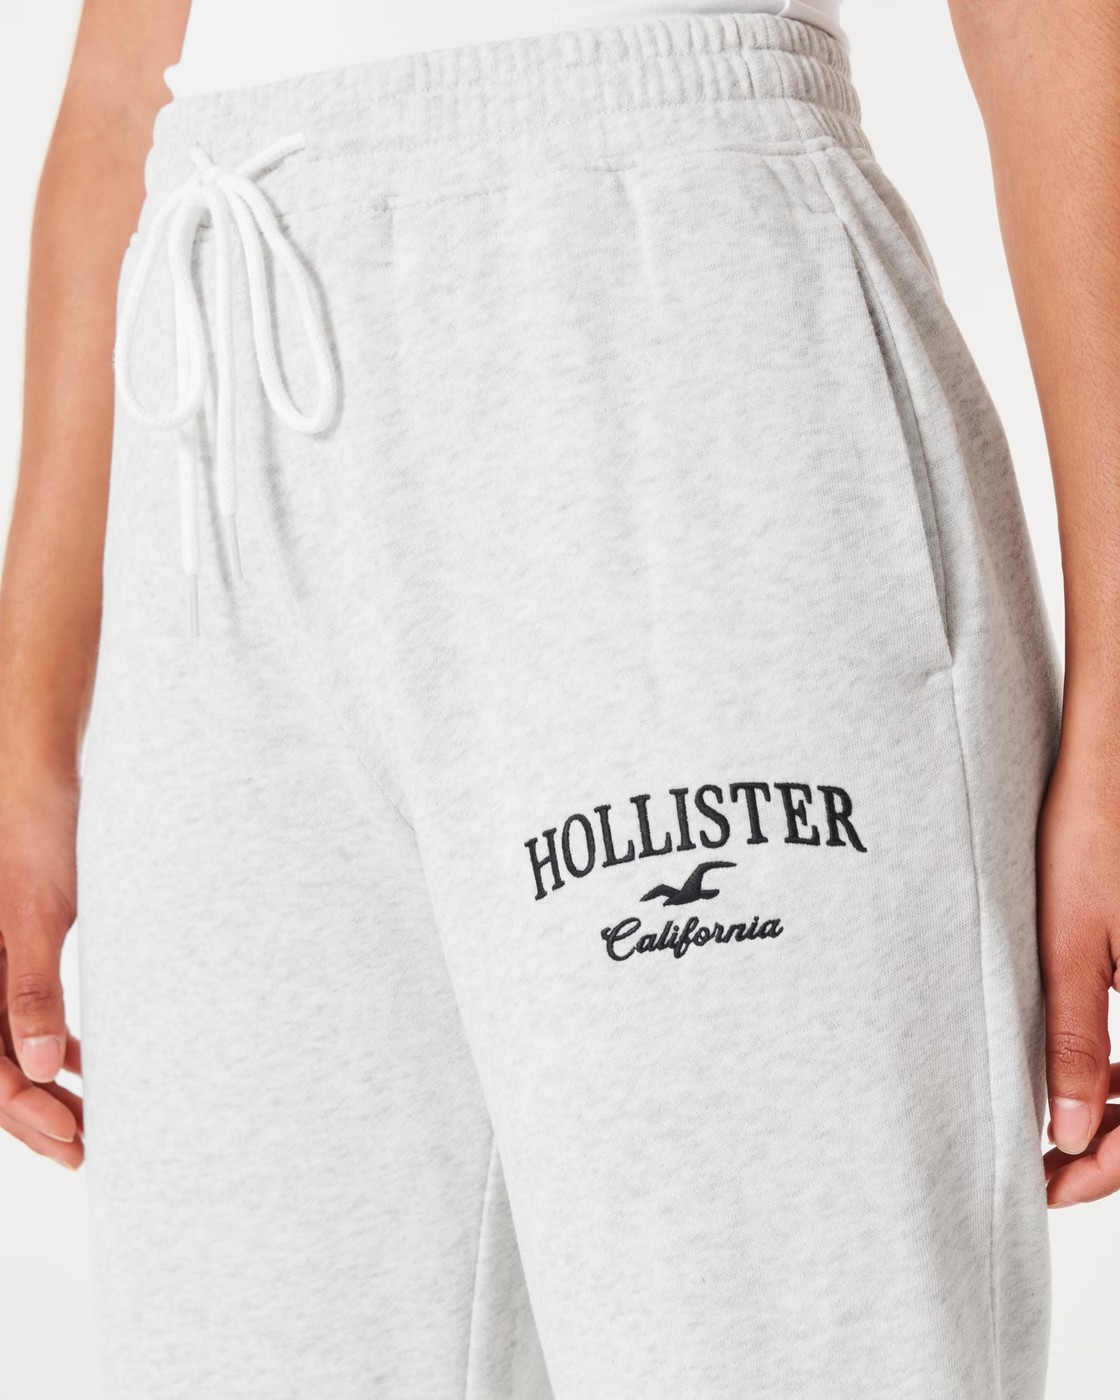 Джоггеры женские - штаны джоггеры Hollister